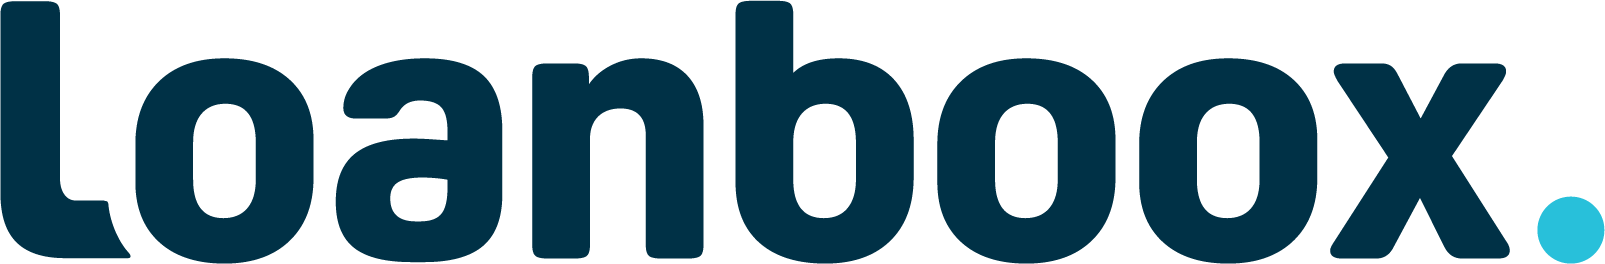 Loanboox logo color